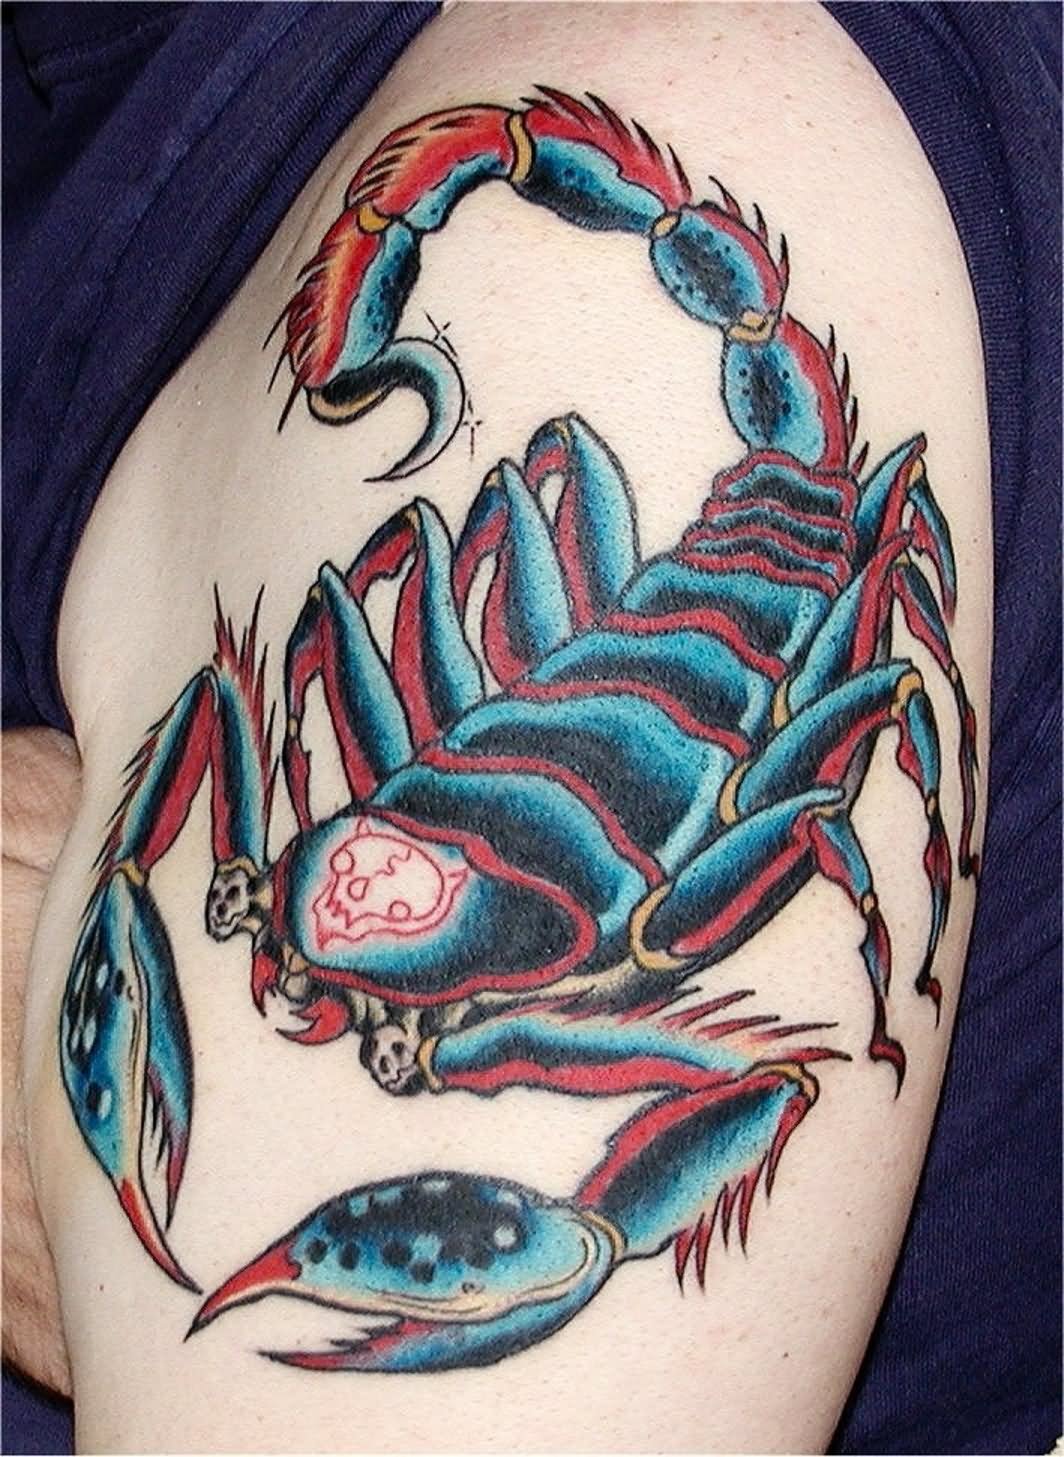 Colorful Scorpion Tattoo Design For Shoulder